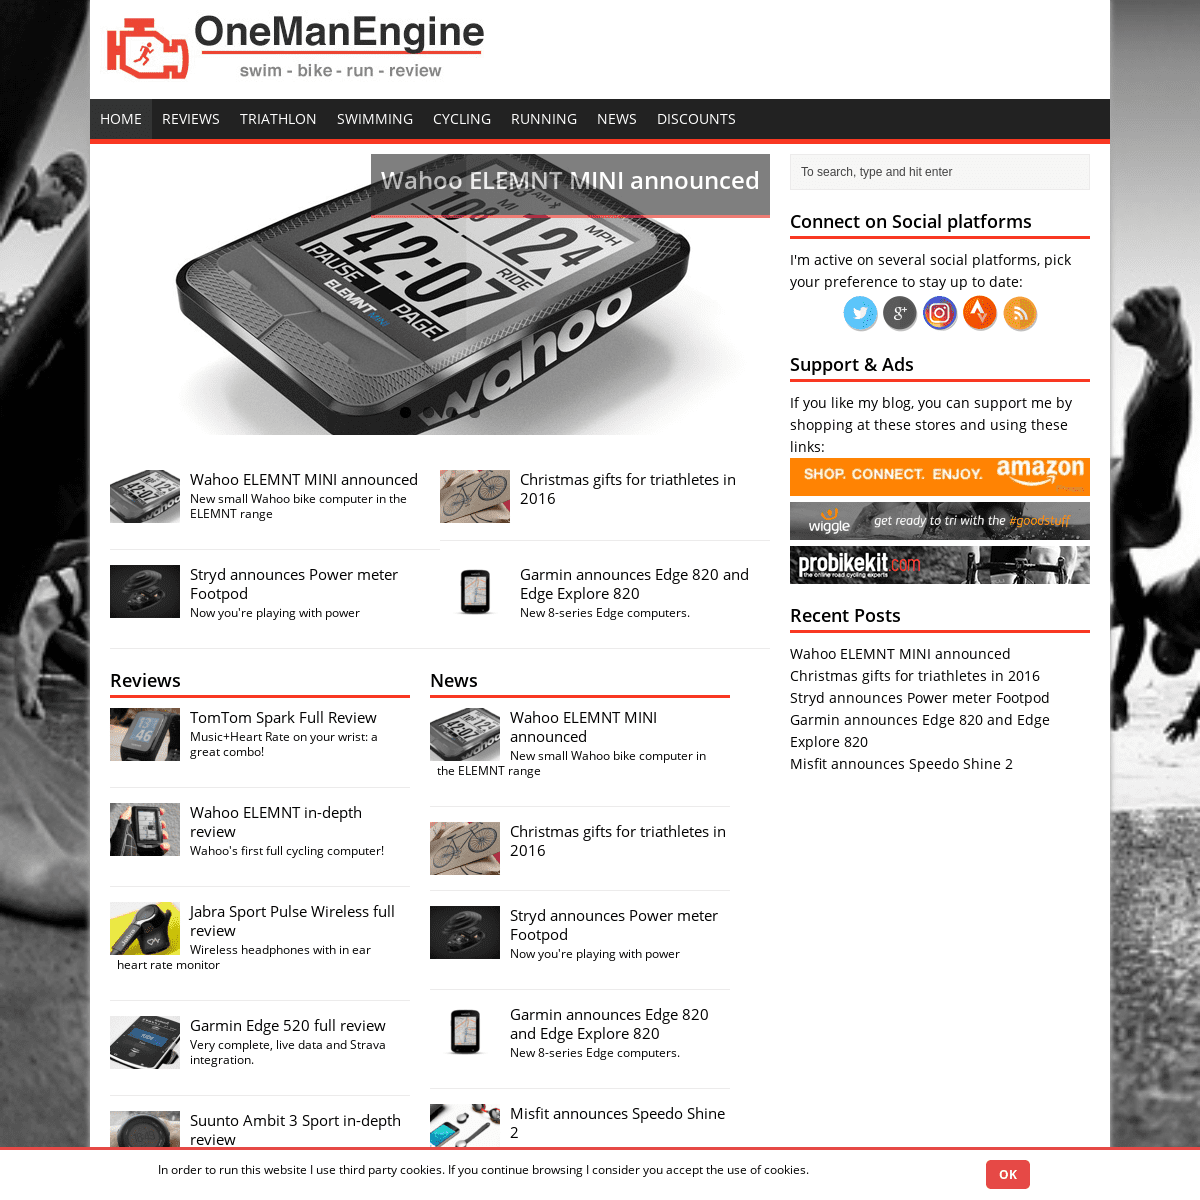 A complete backup of onemanengine.com